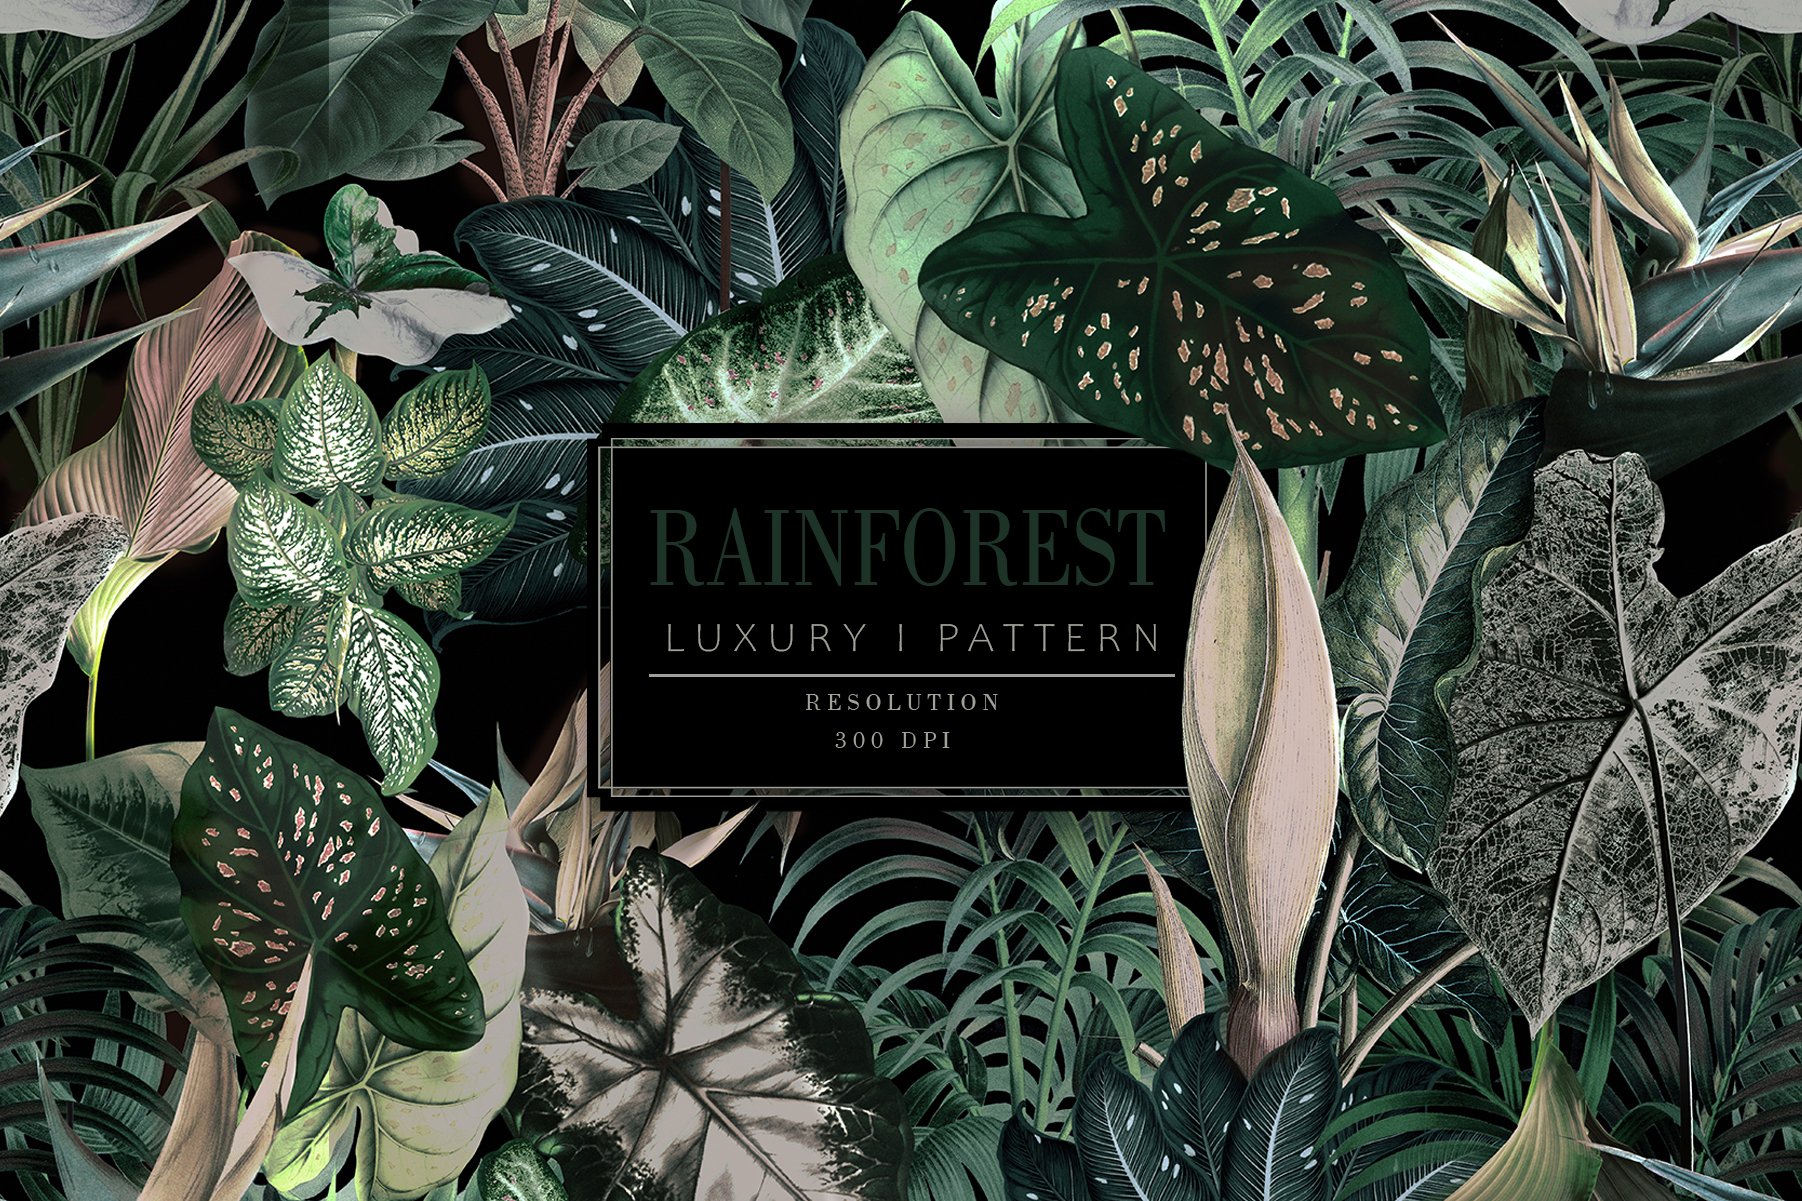 Rainforest Foliage 2040-10